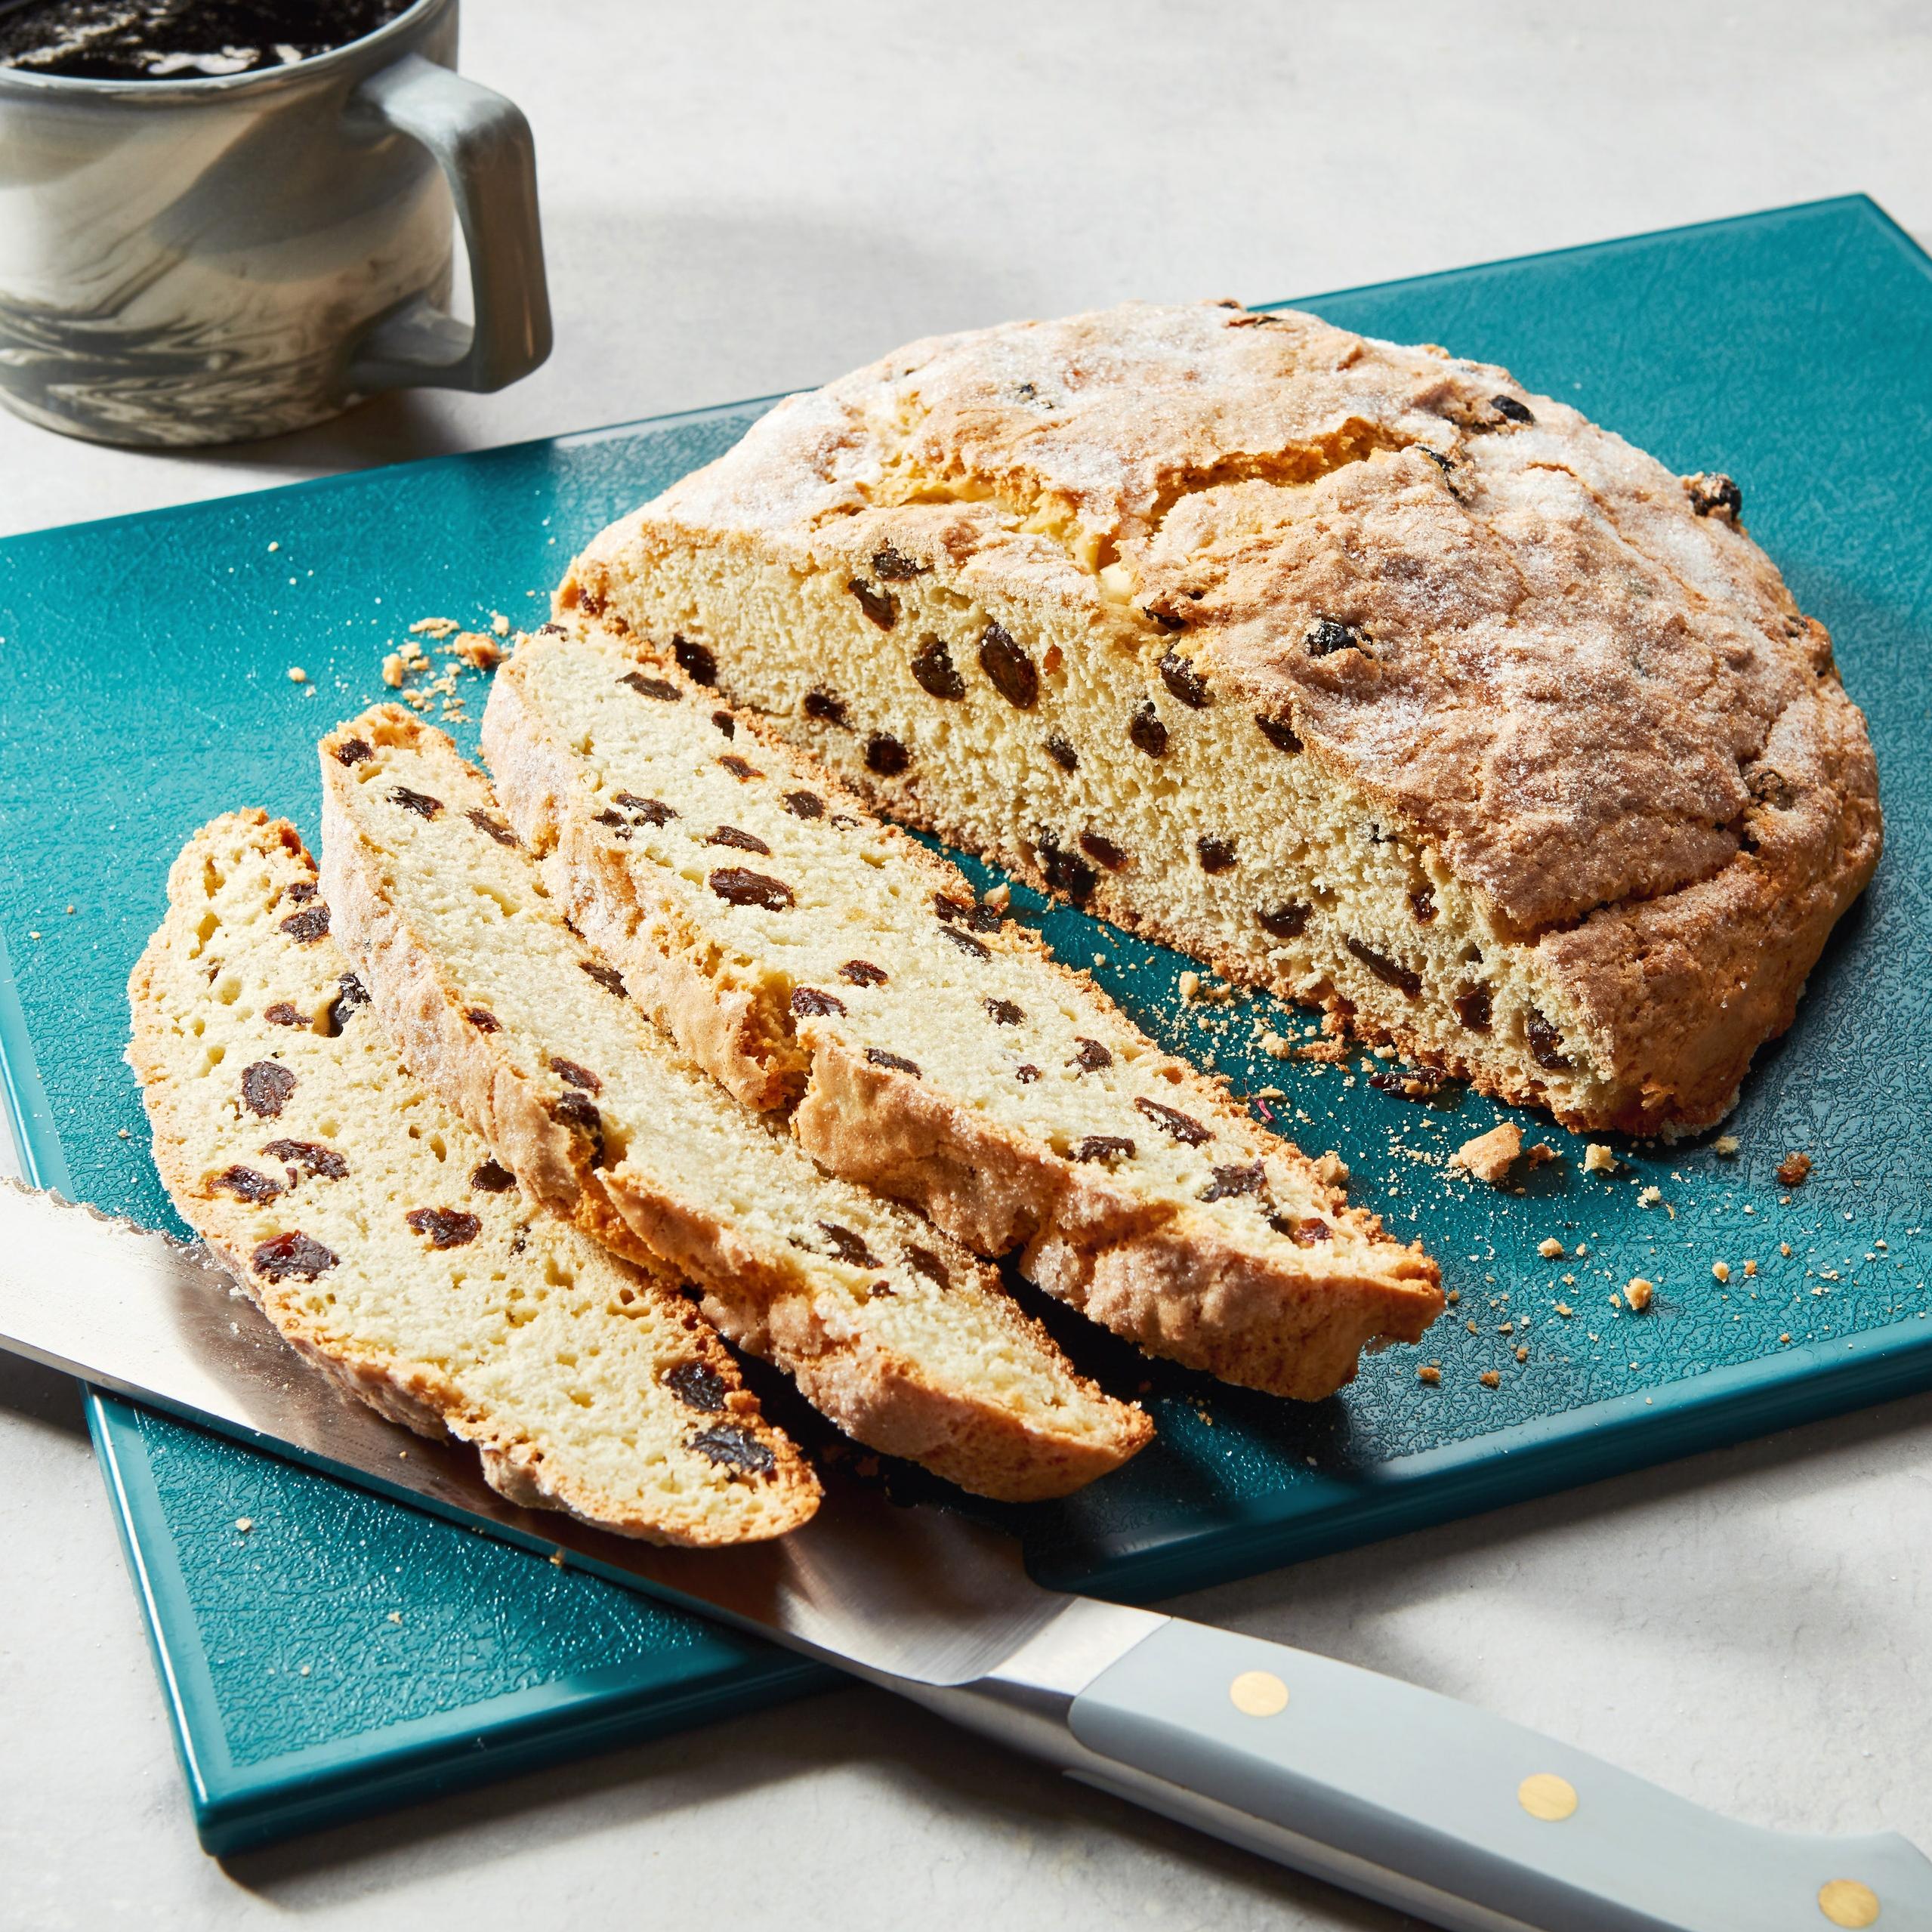  Savor the nostalgic aroma of homemade bread throughout your kitchen.